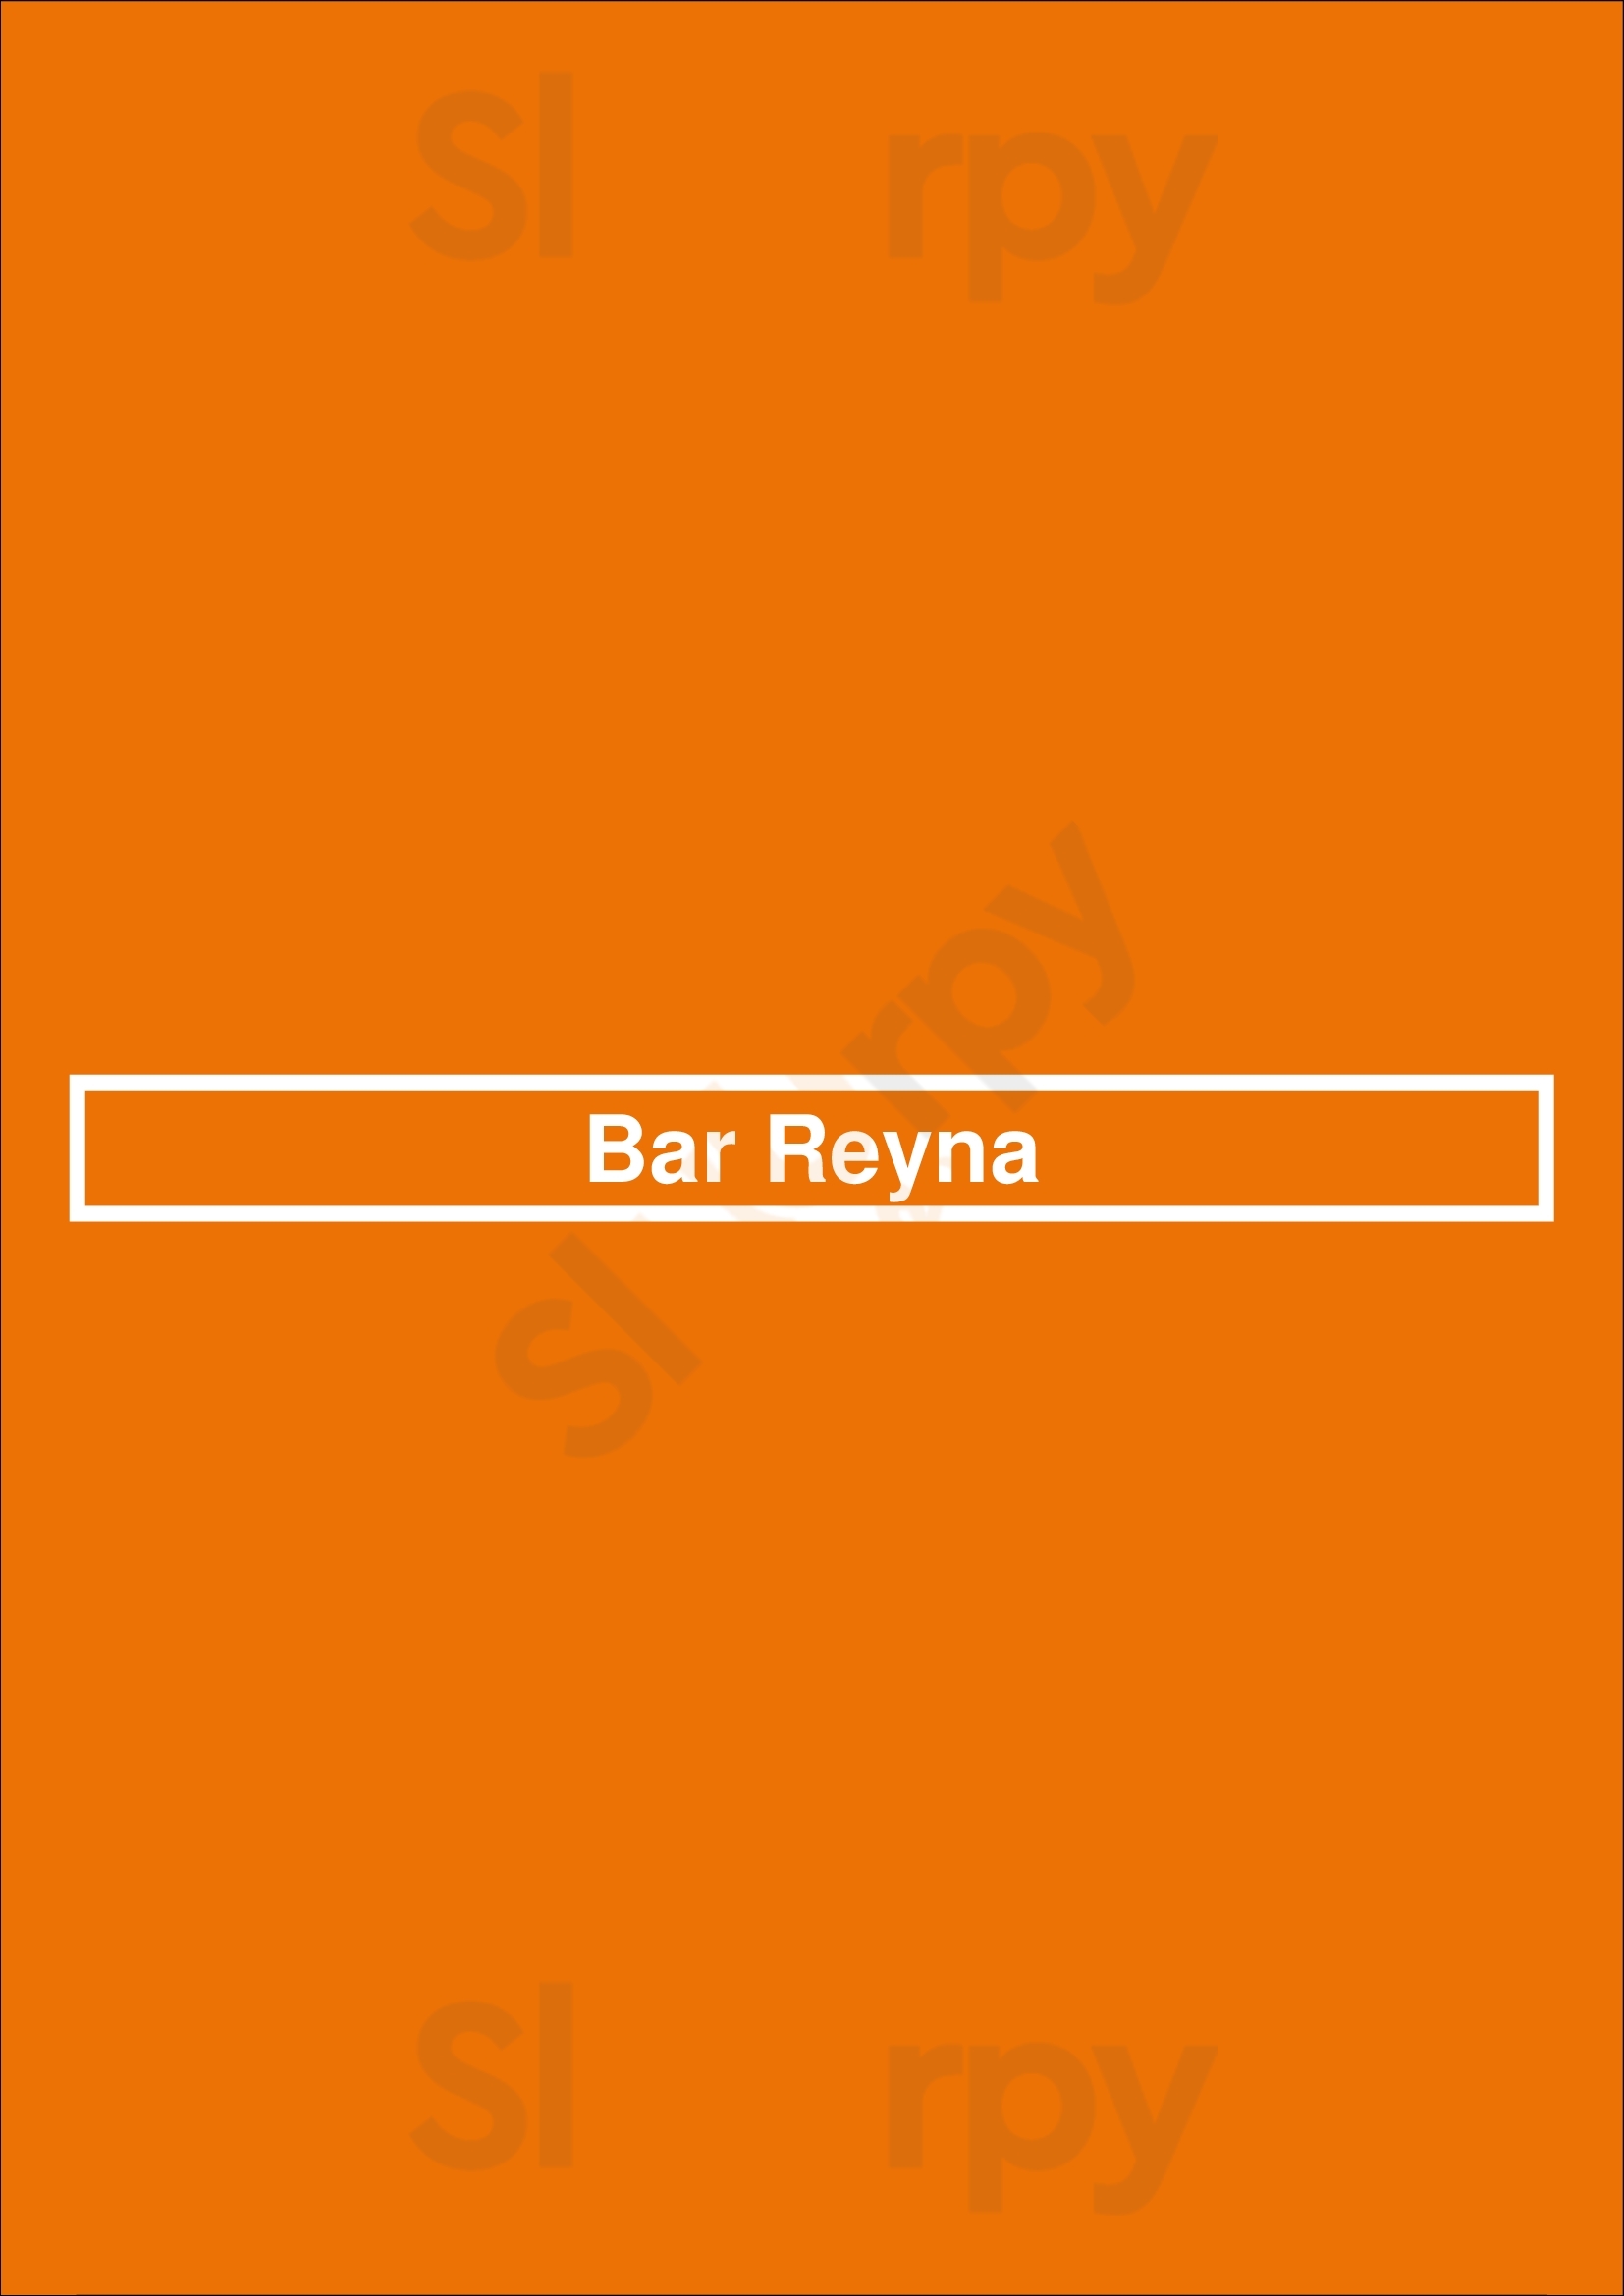 Bar Reyna Toronto Menu - 1